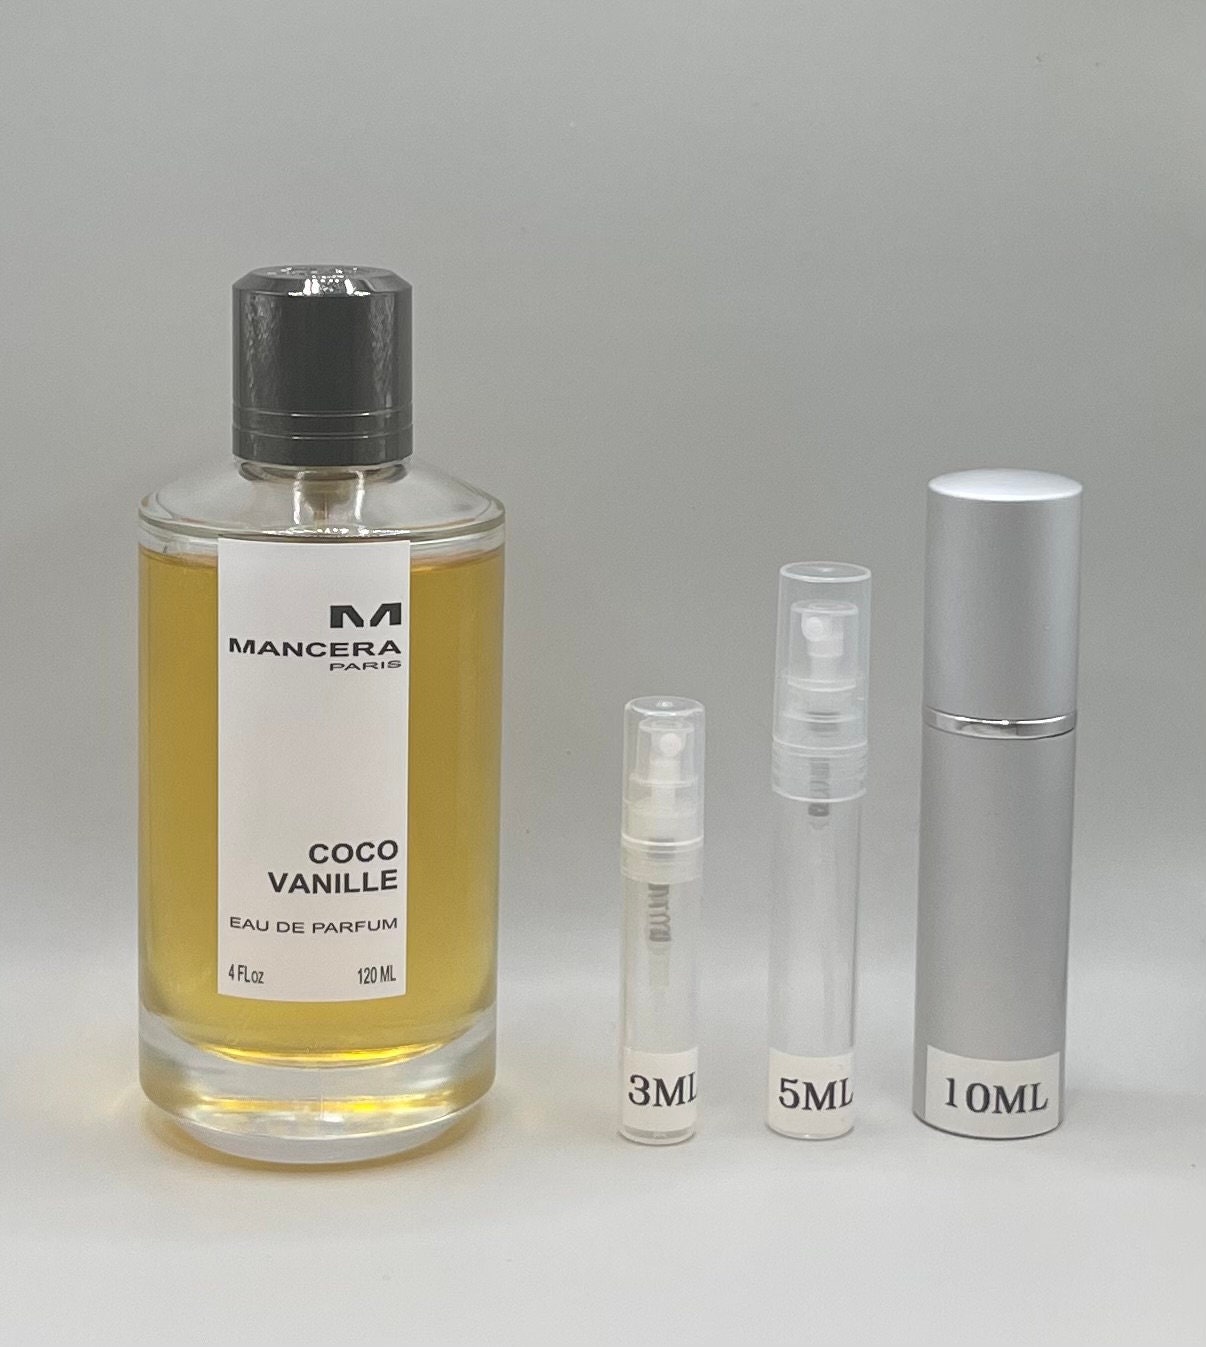 Mancera Coco Vanille Tester 4 oz Eau de Parfum Spray for Women